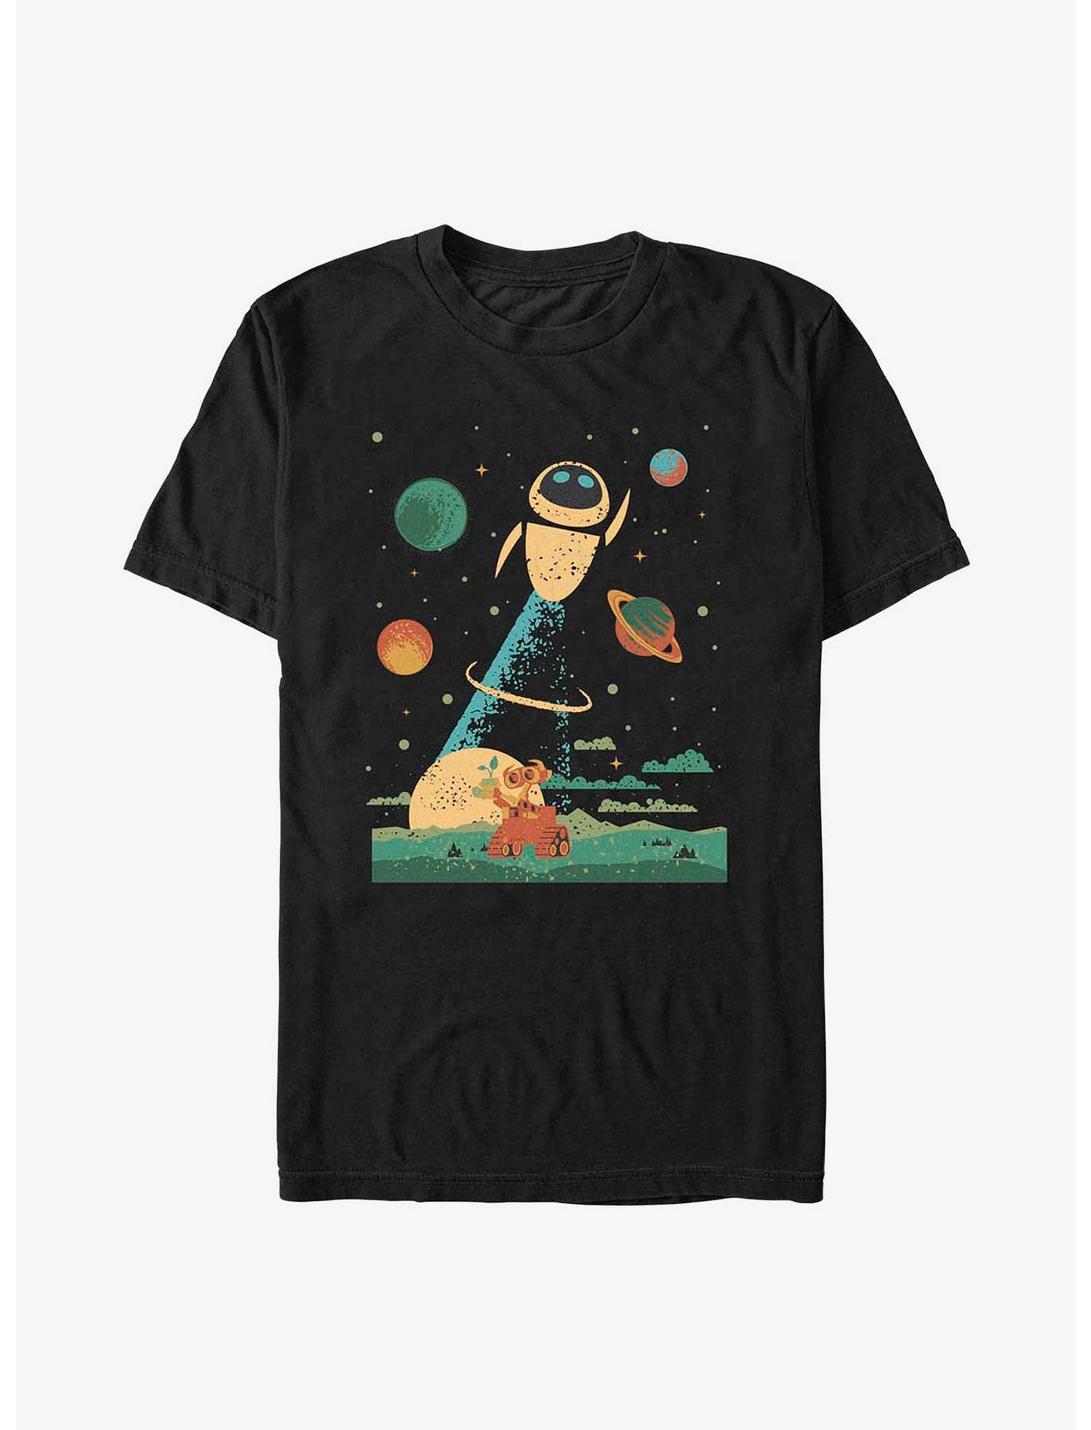 Disney Pixar Wall-E Eve and Wall-E Space Poster T-Shirt, BLACK, hi-res